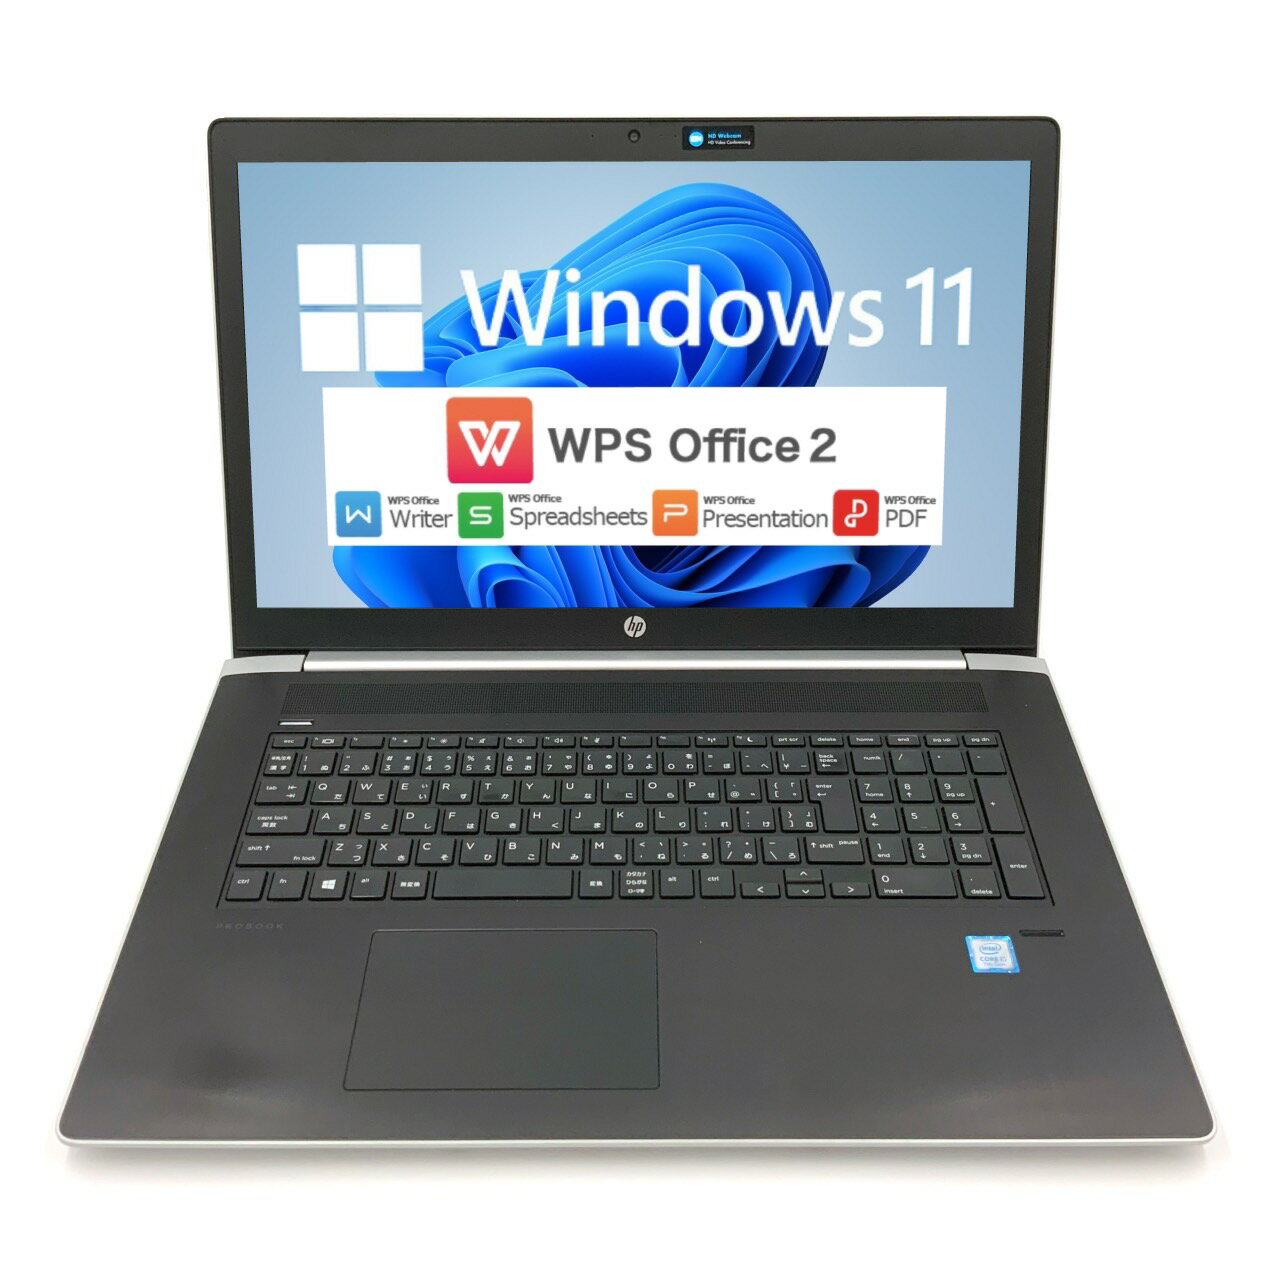 【Windows11】 【大画面17.3インチ】 【高スペック】 HP ProBook 470 G5 第8世代 Core i7 7500U/2.70GHz 16GB 新品SSD480GB M.2 Windows10 64bit WPSOffice 17.3インチ フルHD カメラ テンキー 無線LAN 中古パソコン ノートパソコン PC Notebook 【中古】